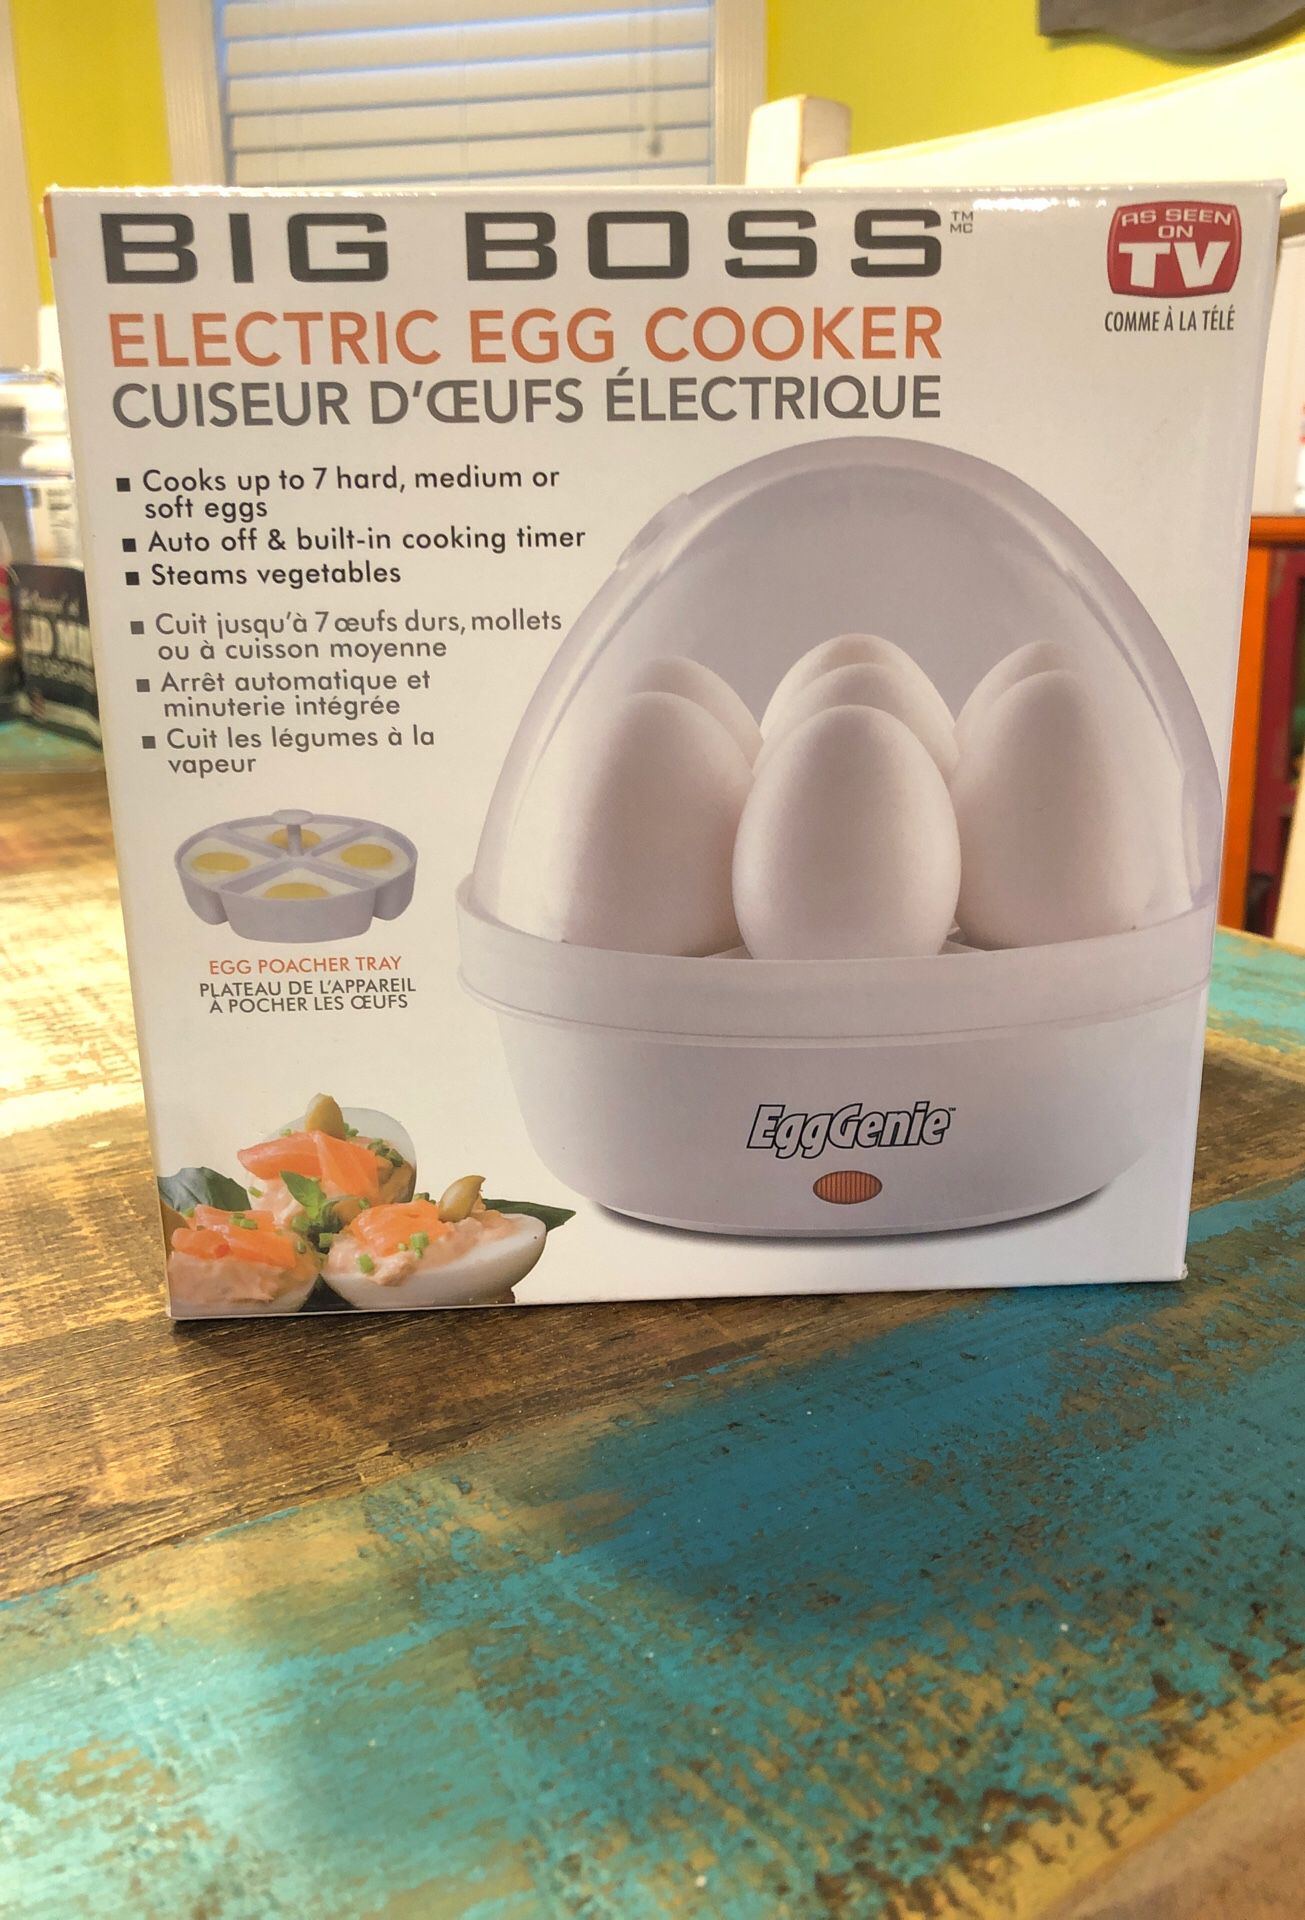 New! Big boss electric egg cooker